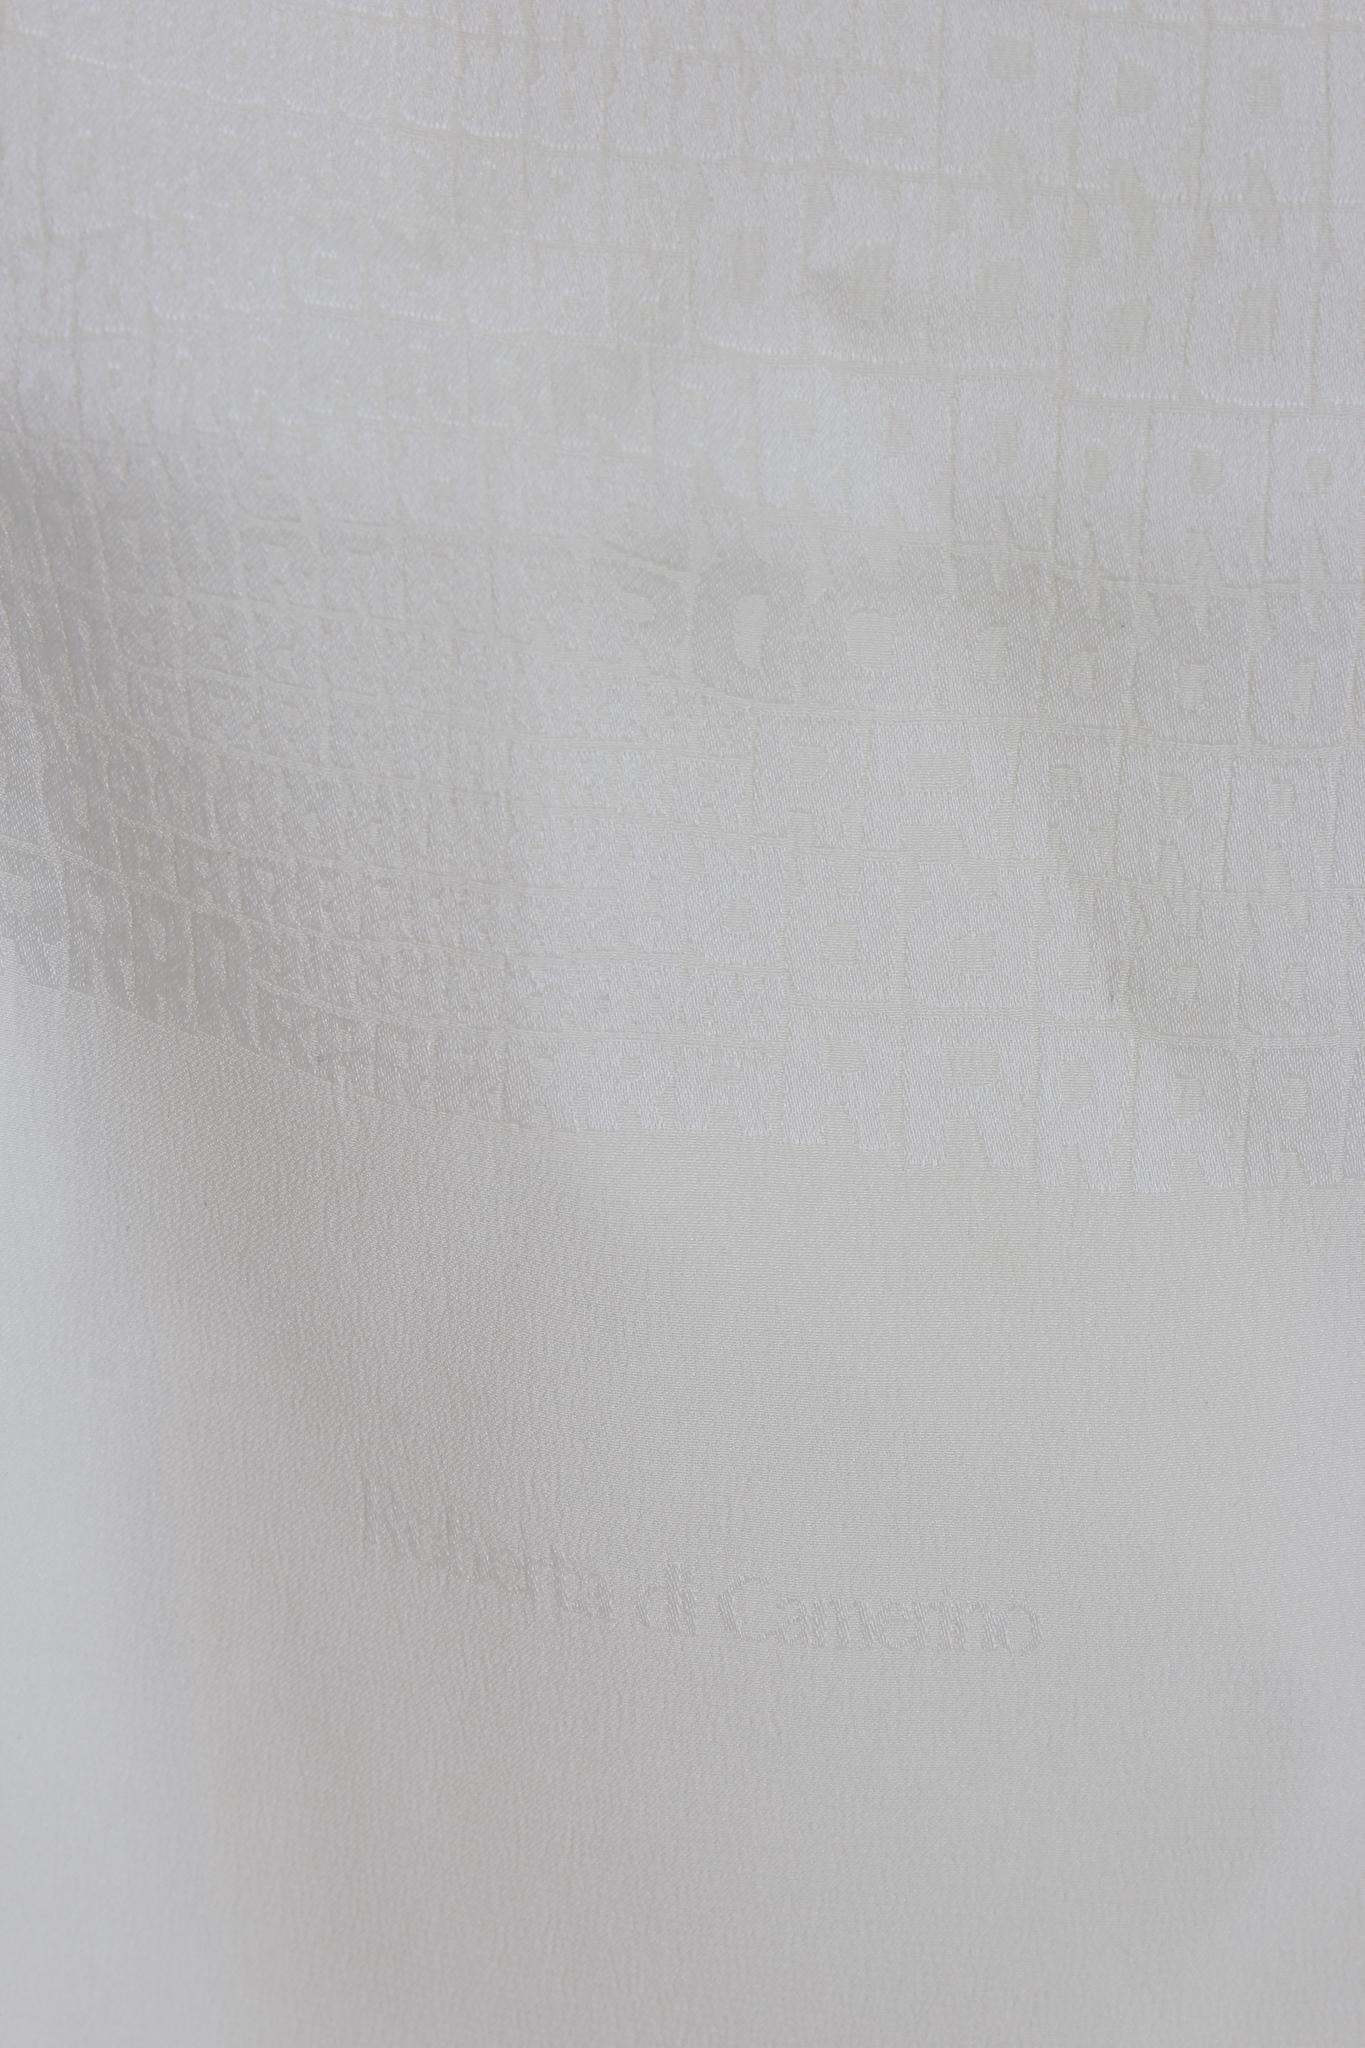 Roberta di Camerino 90s vintage tubular scarf. Tone-on-tone monogram pattern in beige, 100% silk fabric. Made in italy.

Measures: 37 x 170 cm